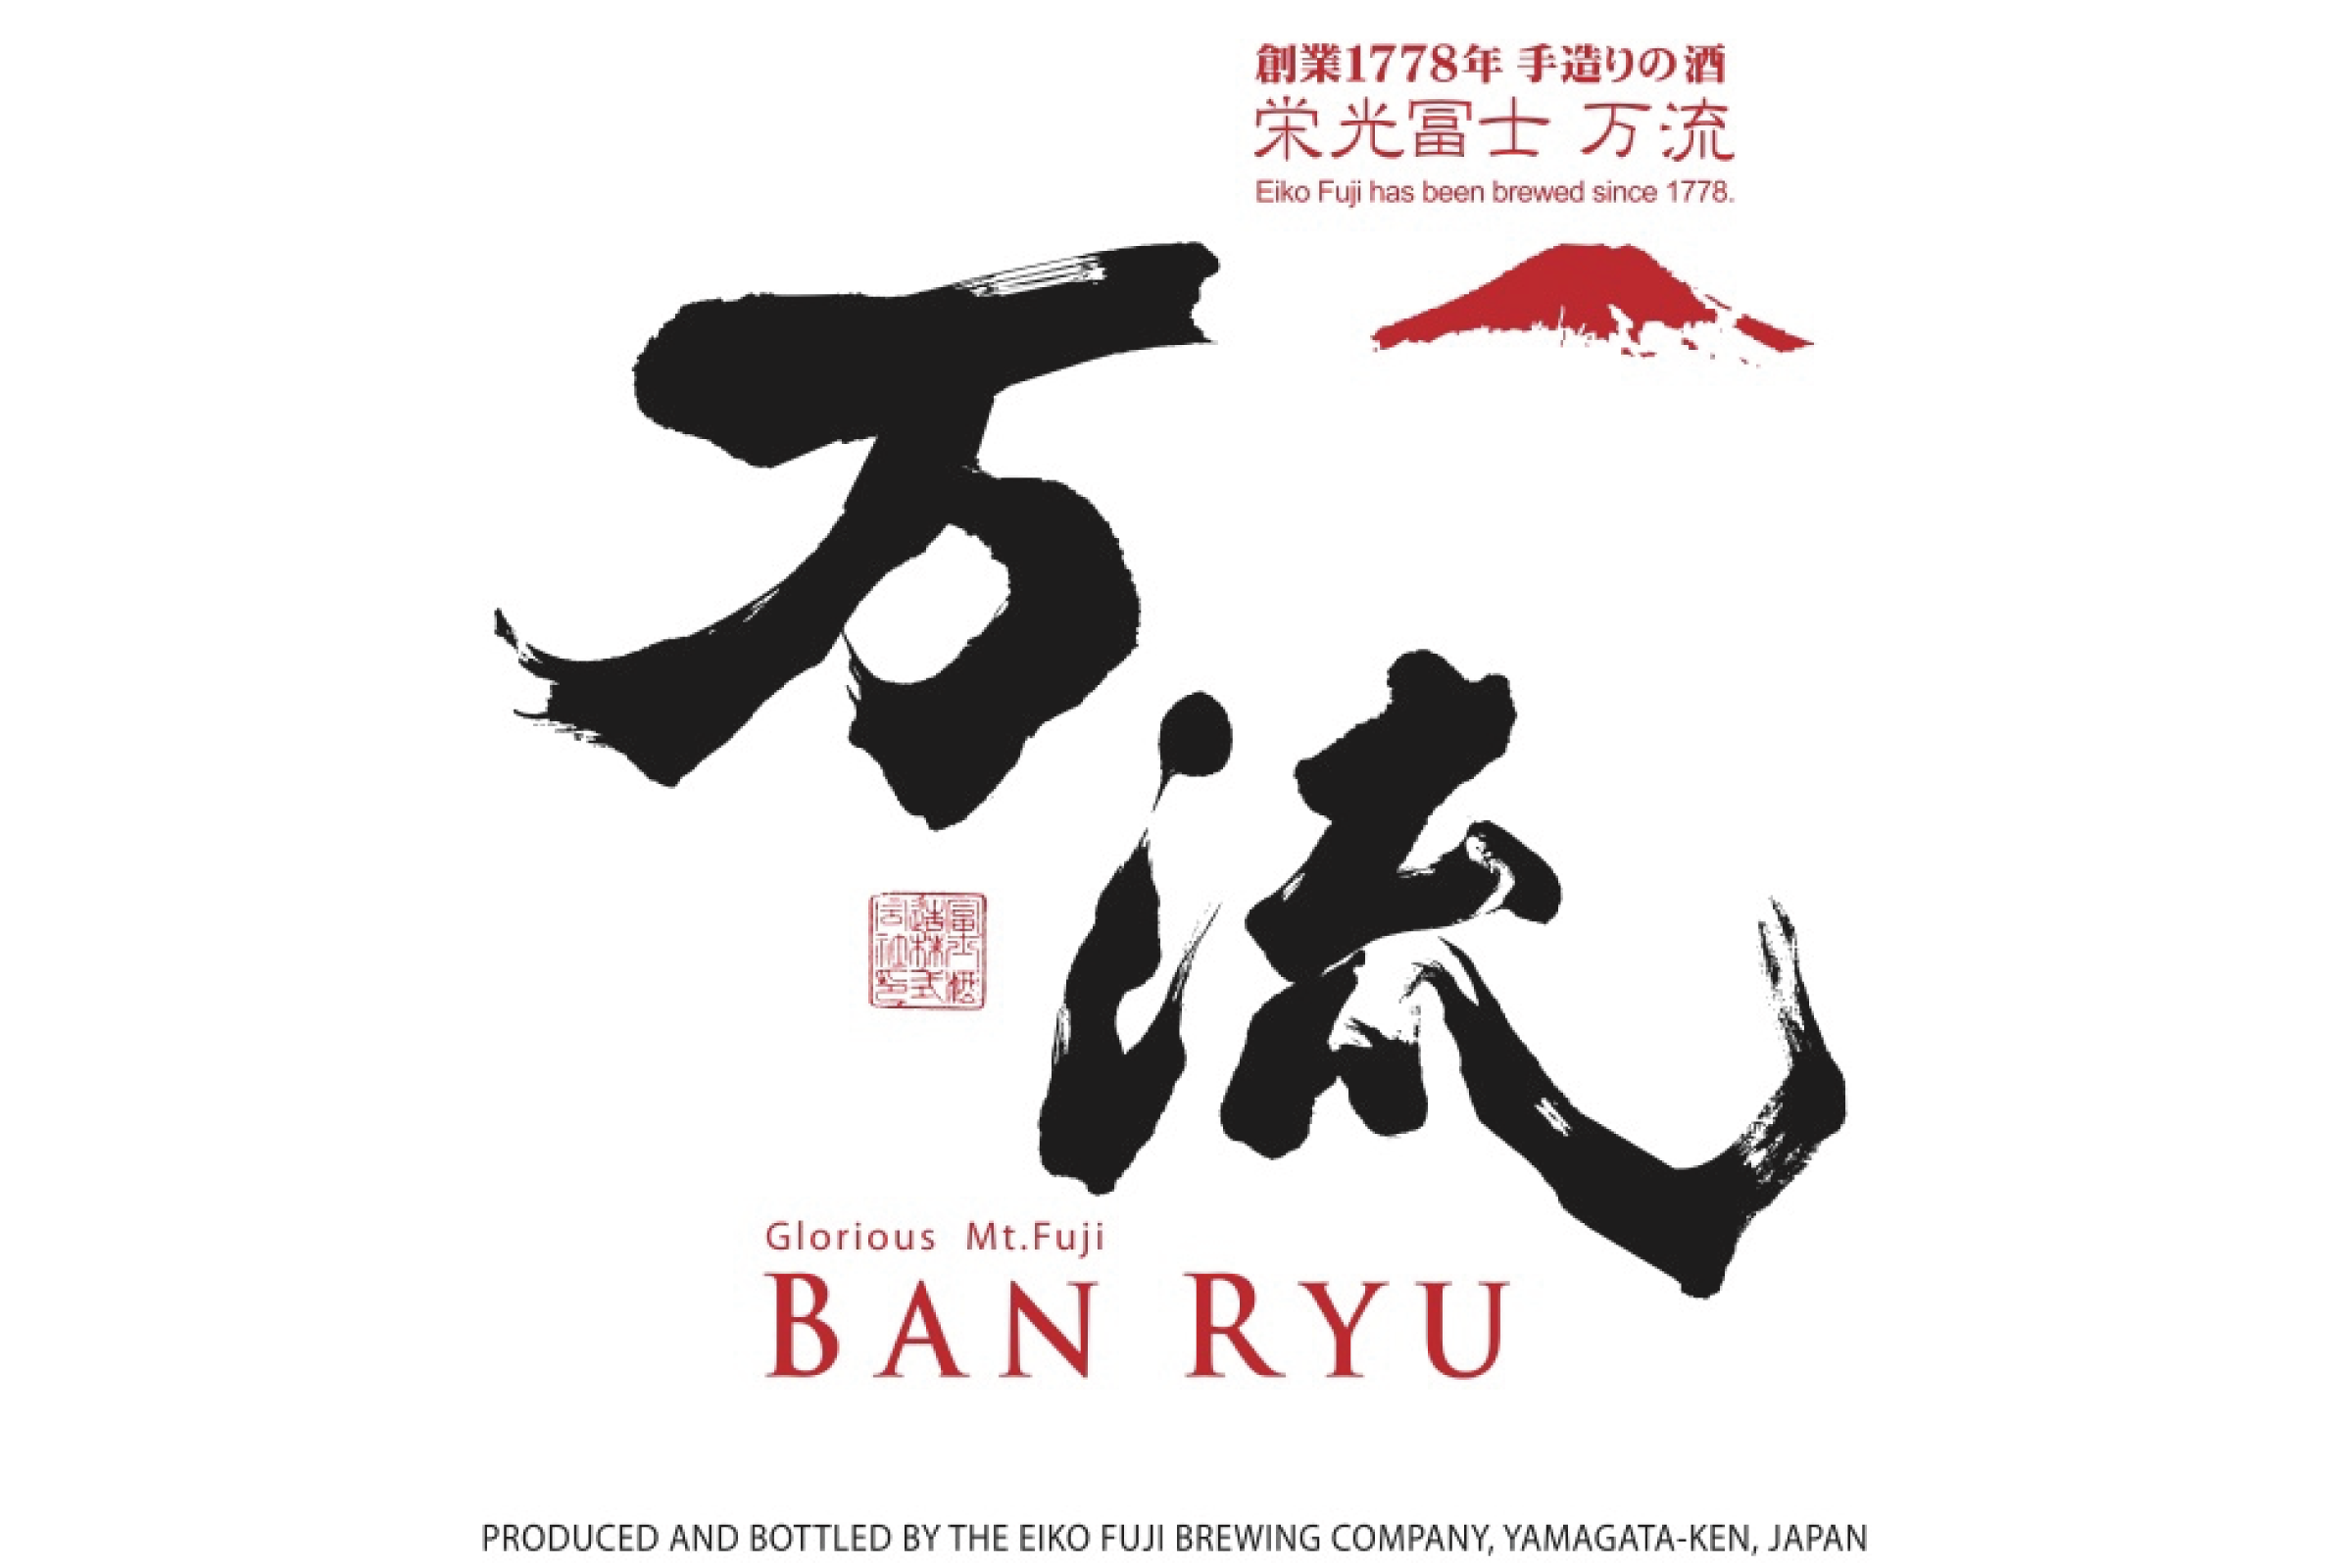 Biko fuji ban ryu